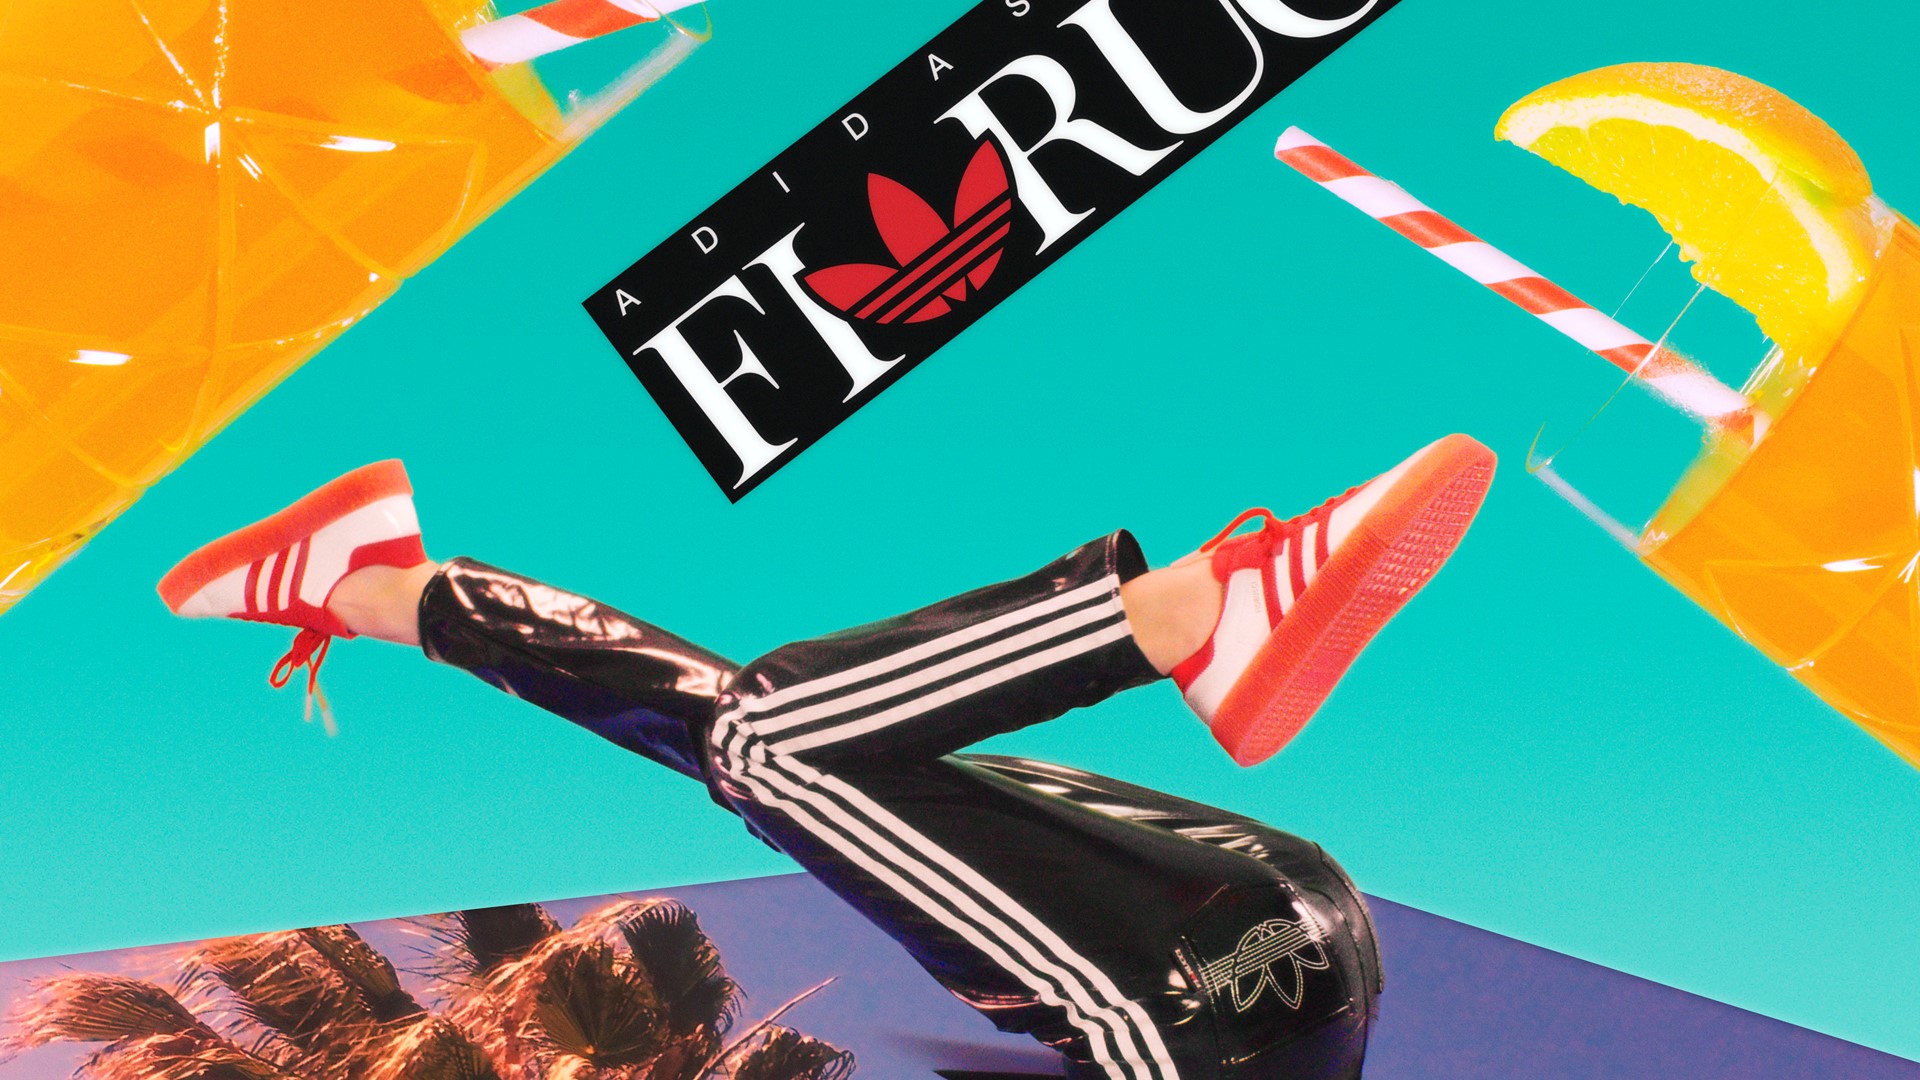 adidas Originals Fiorucci: celebrating two iconic brands